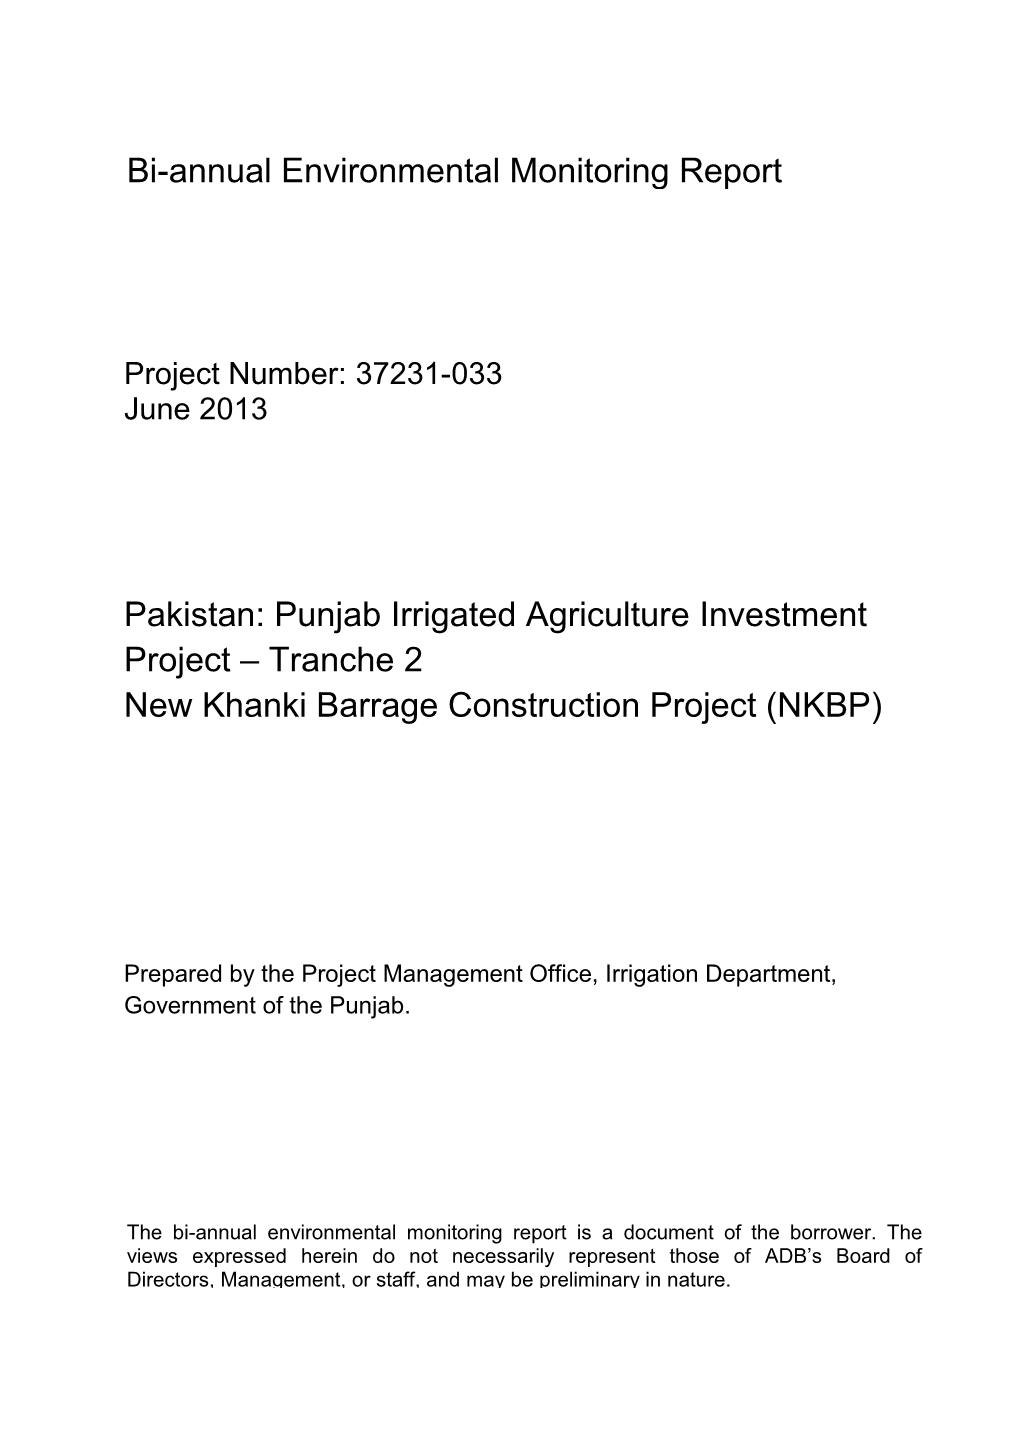 New Khanki Barrage Construction Project (NKBP)